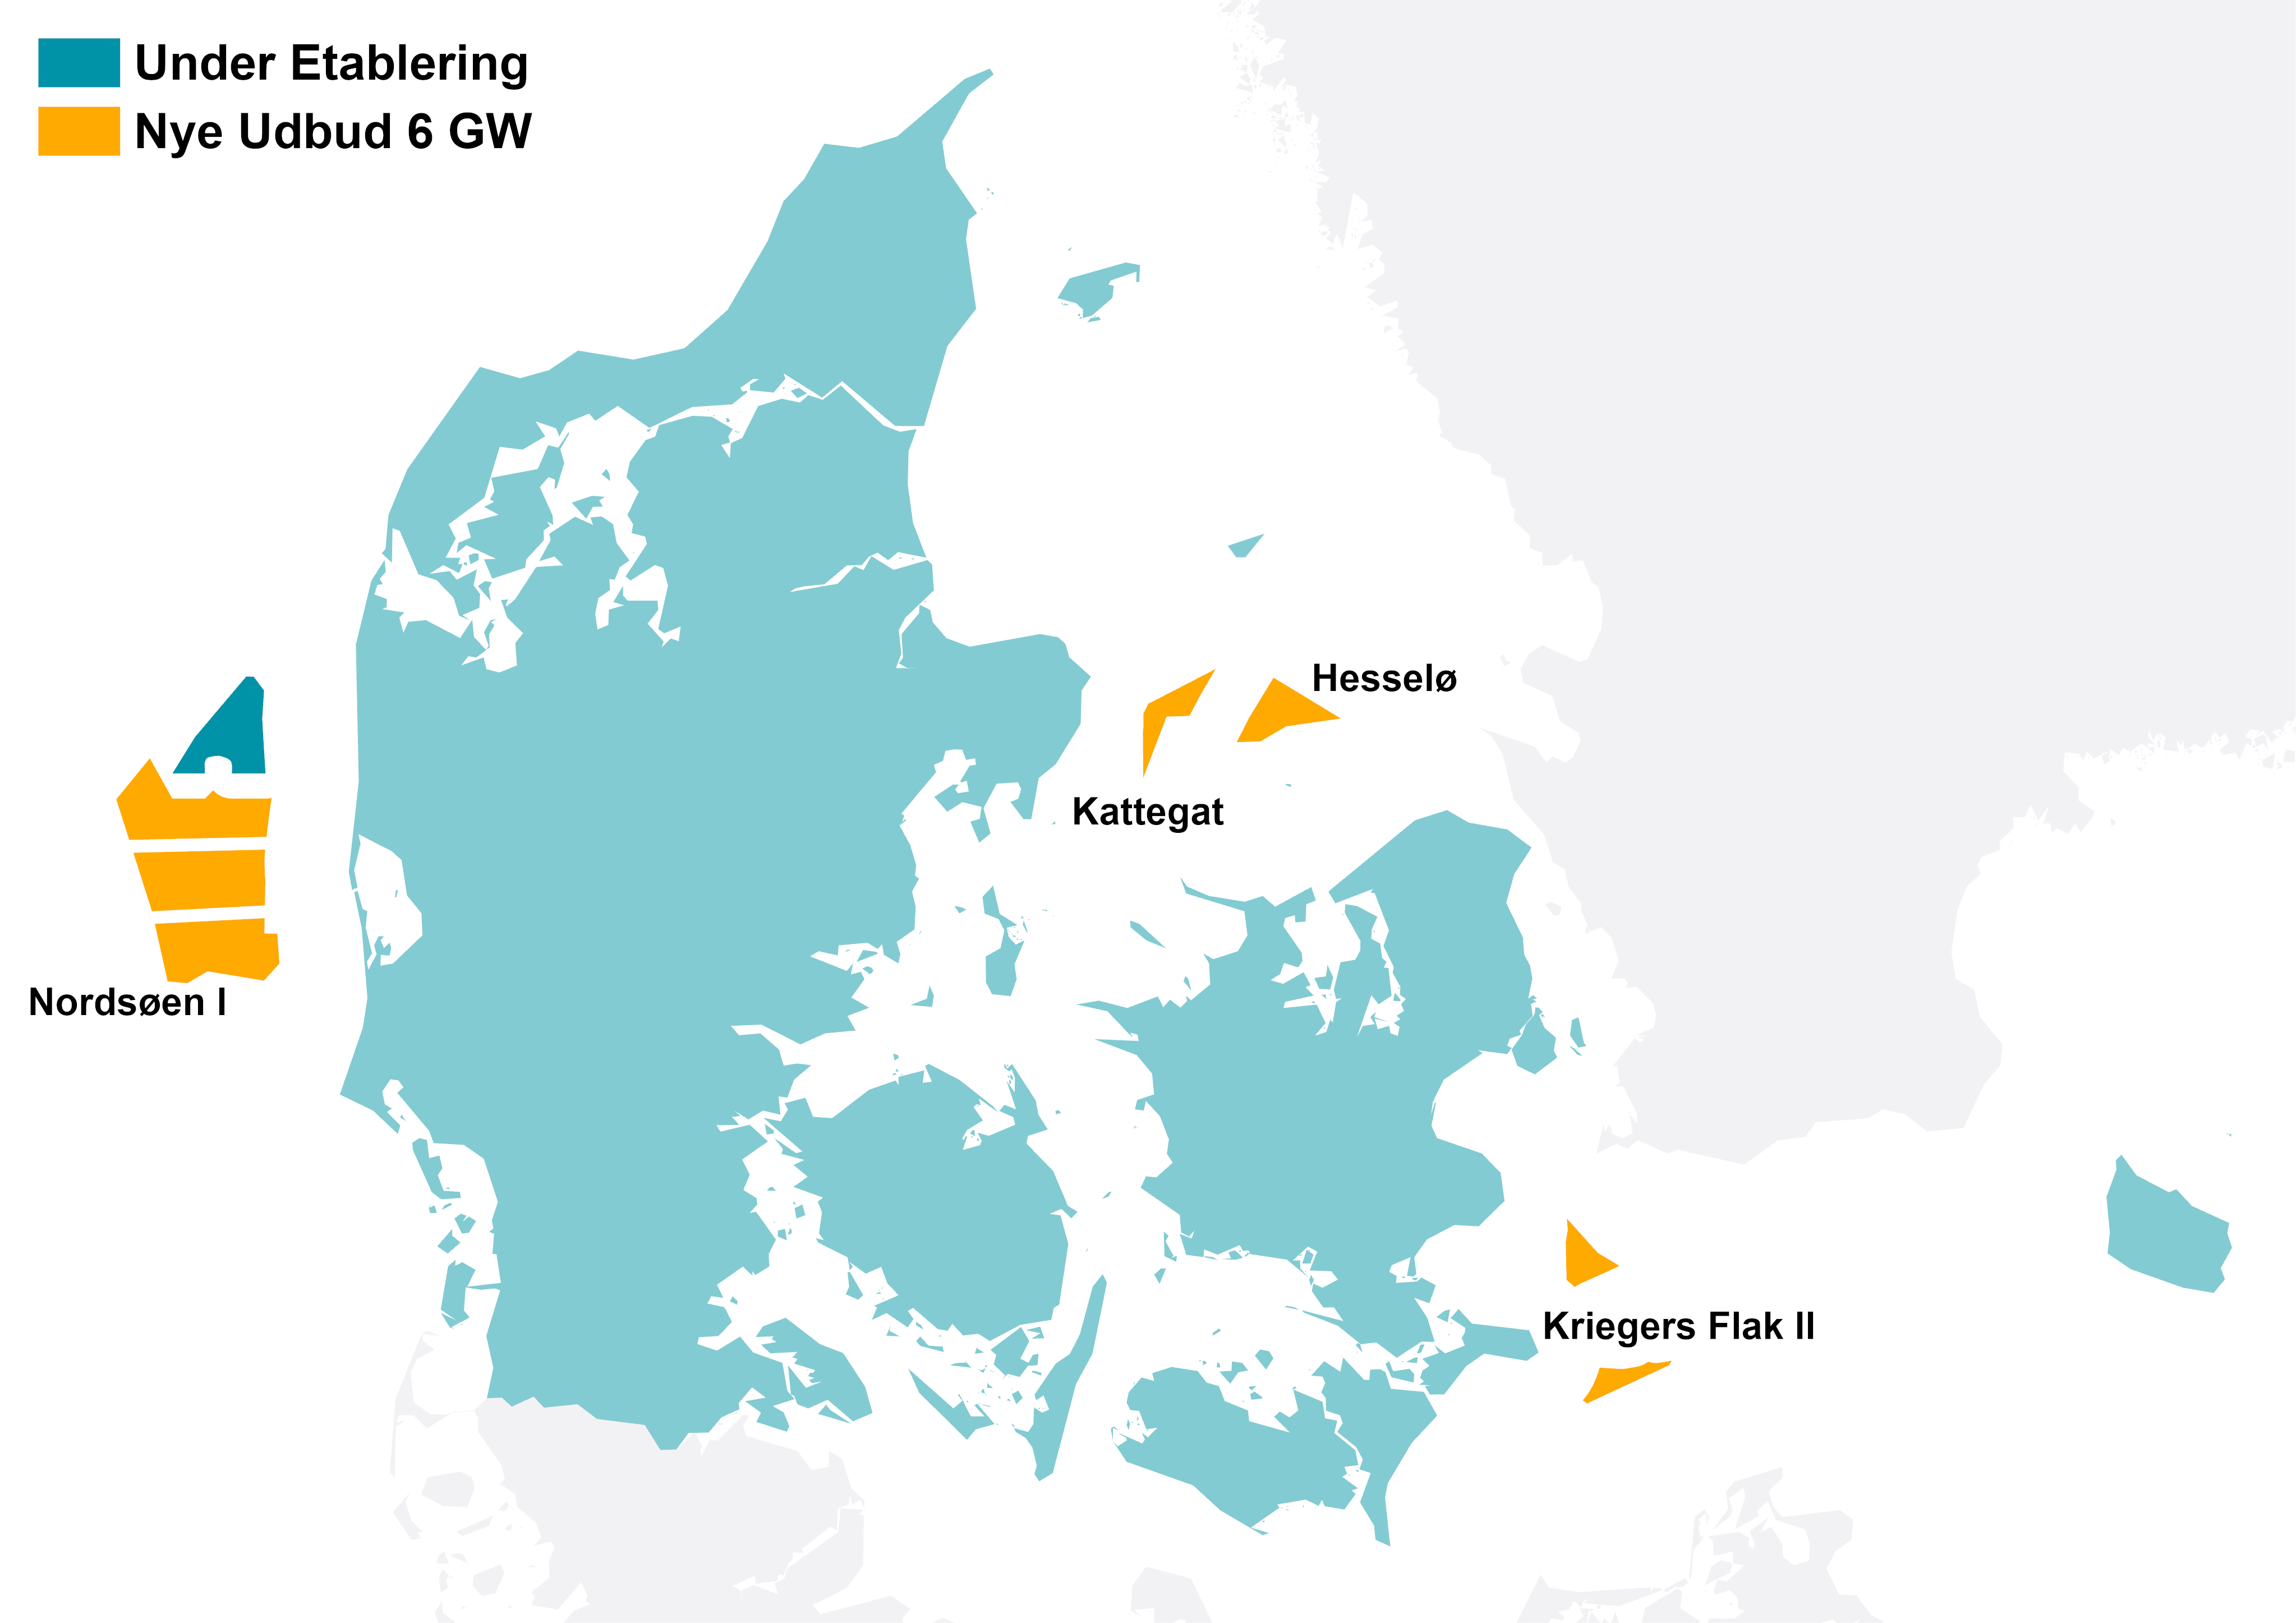 Denmark announces vast offshore wind expansion